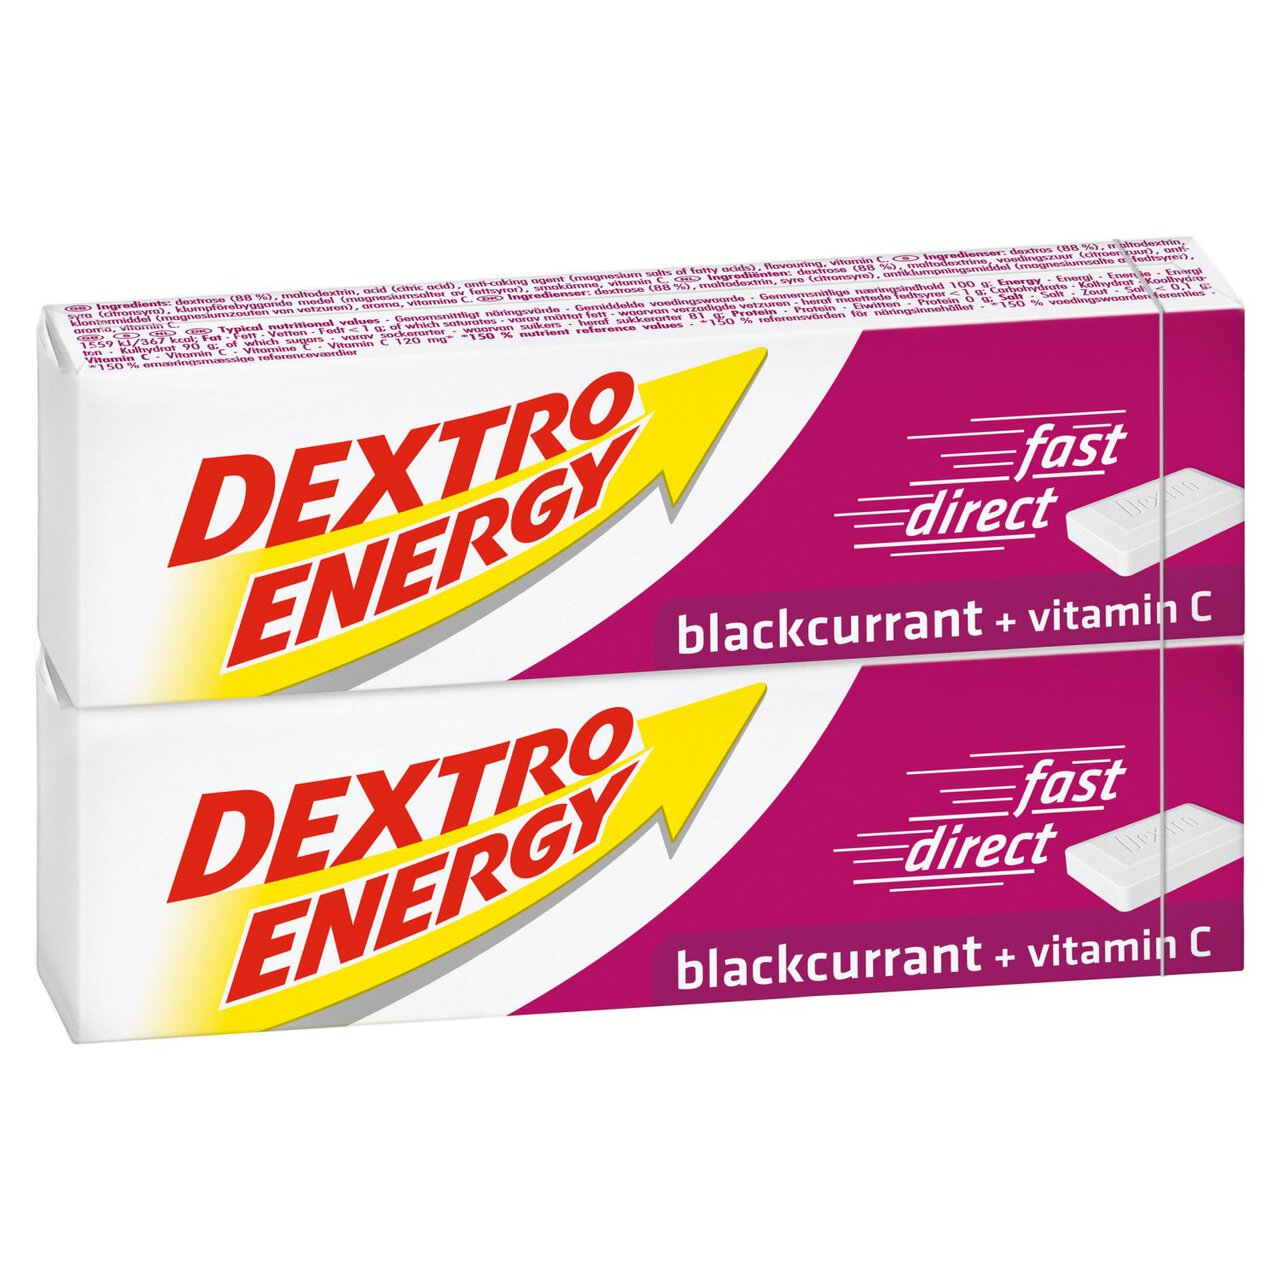 Dextro Blackcurrant + Vitamin C Energy Tablets 2 x 14 per pack